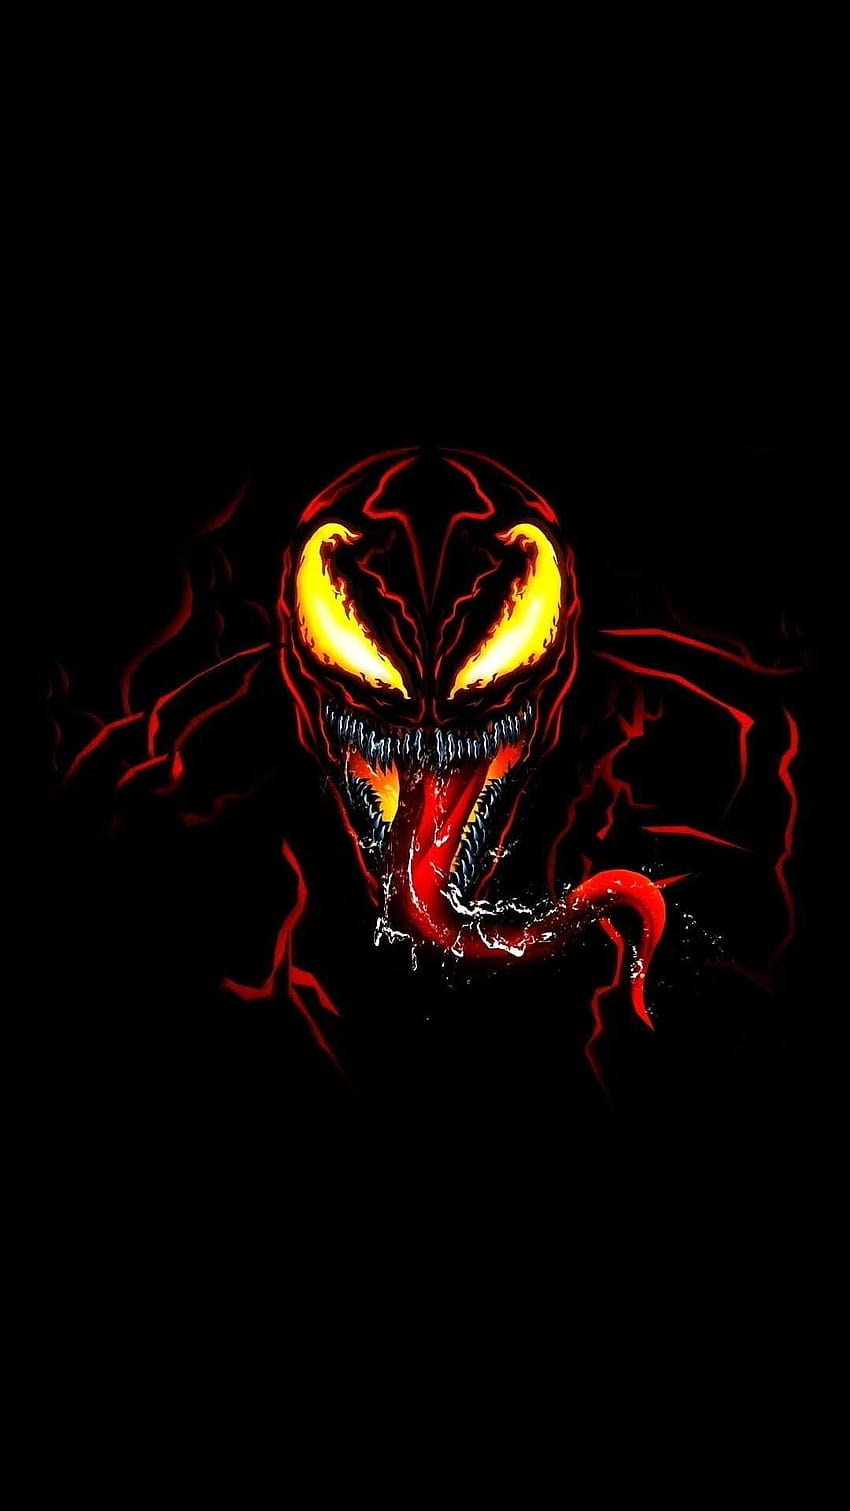 Neon Venom wallpaper by Theheroshadow on DeviantArt